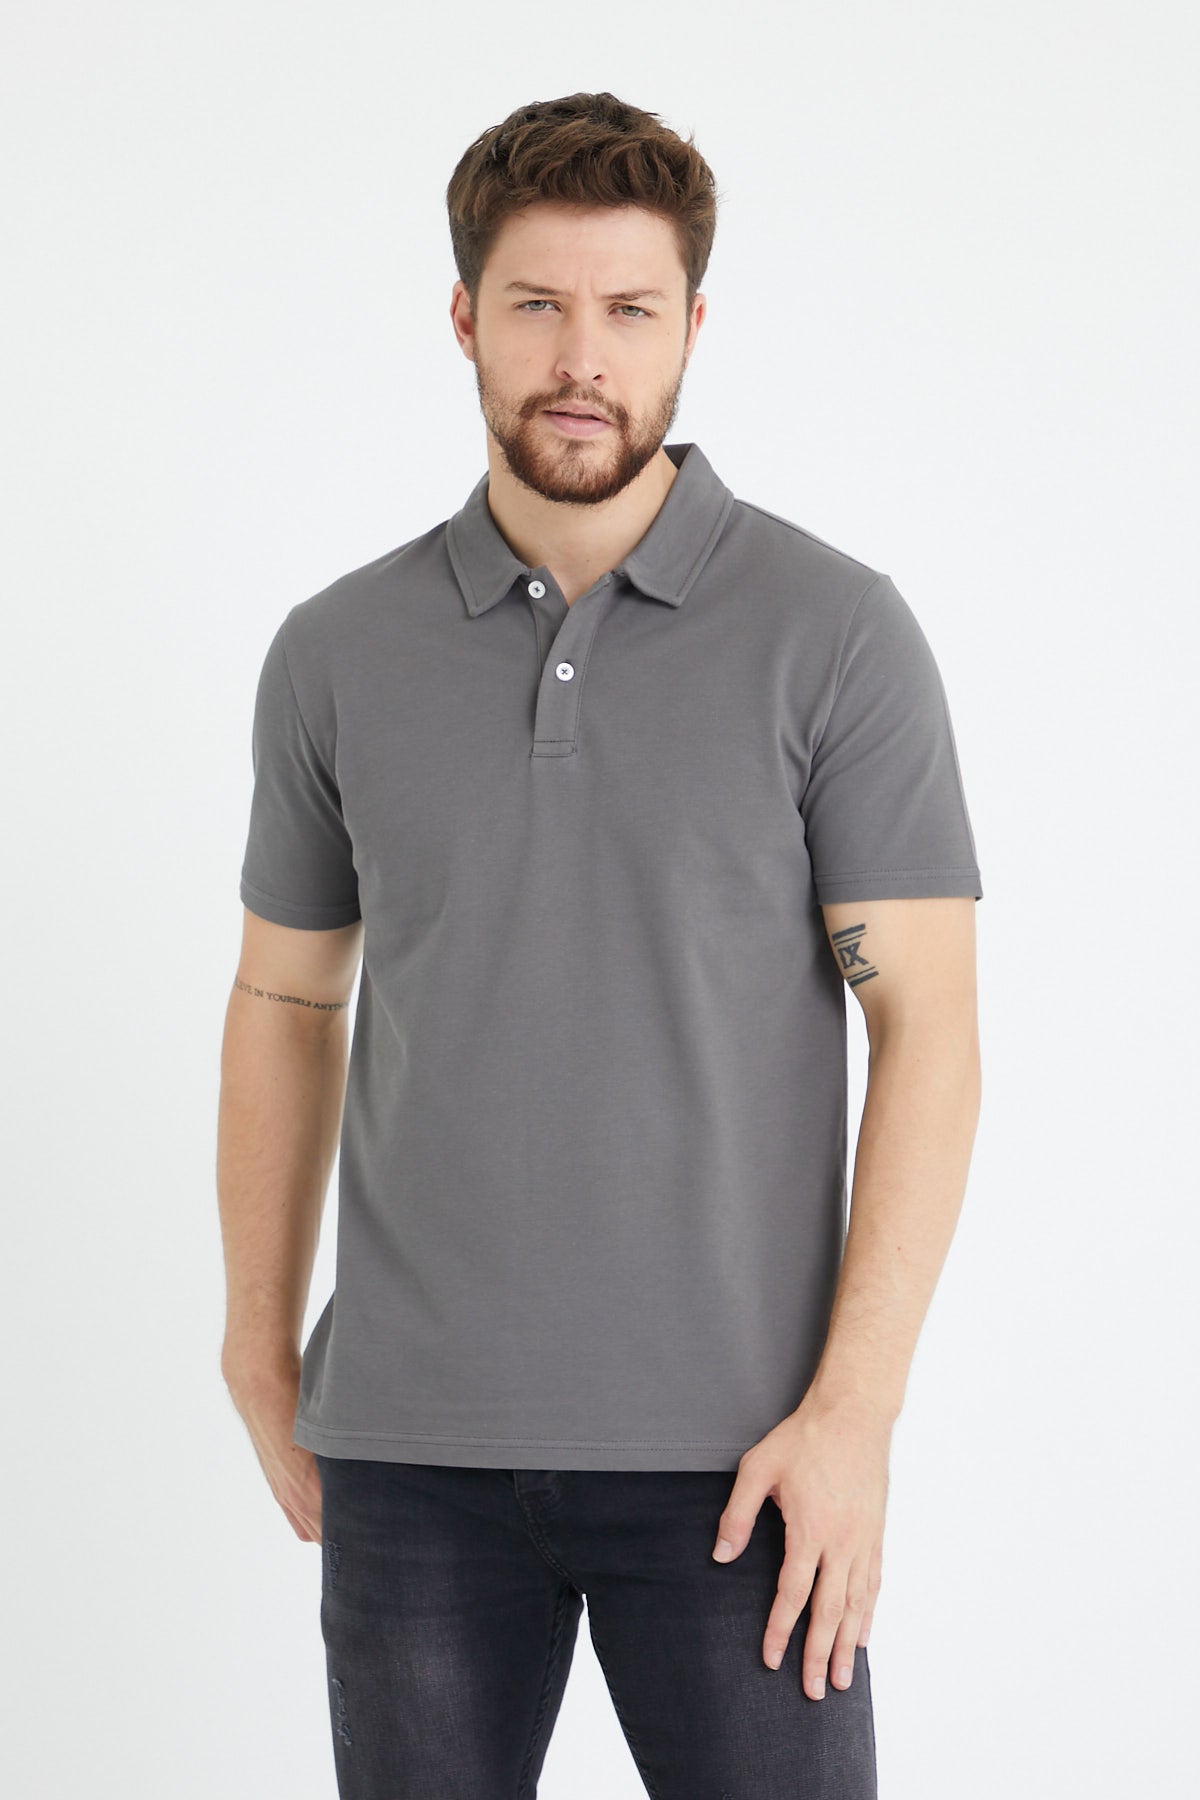 Men's Polo Shirt,Polo Shirts for Men Short Sleeve Men's Classic